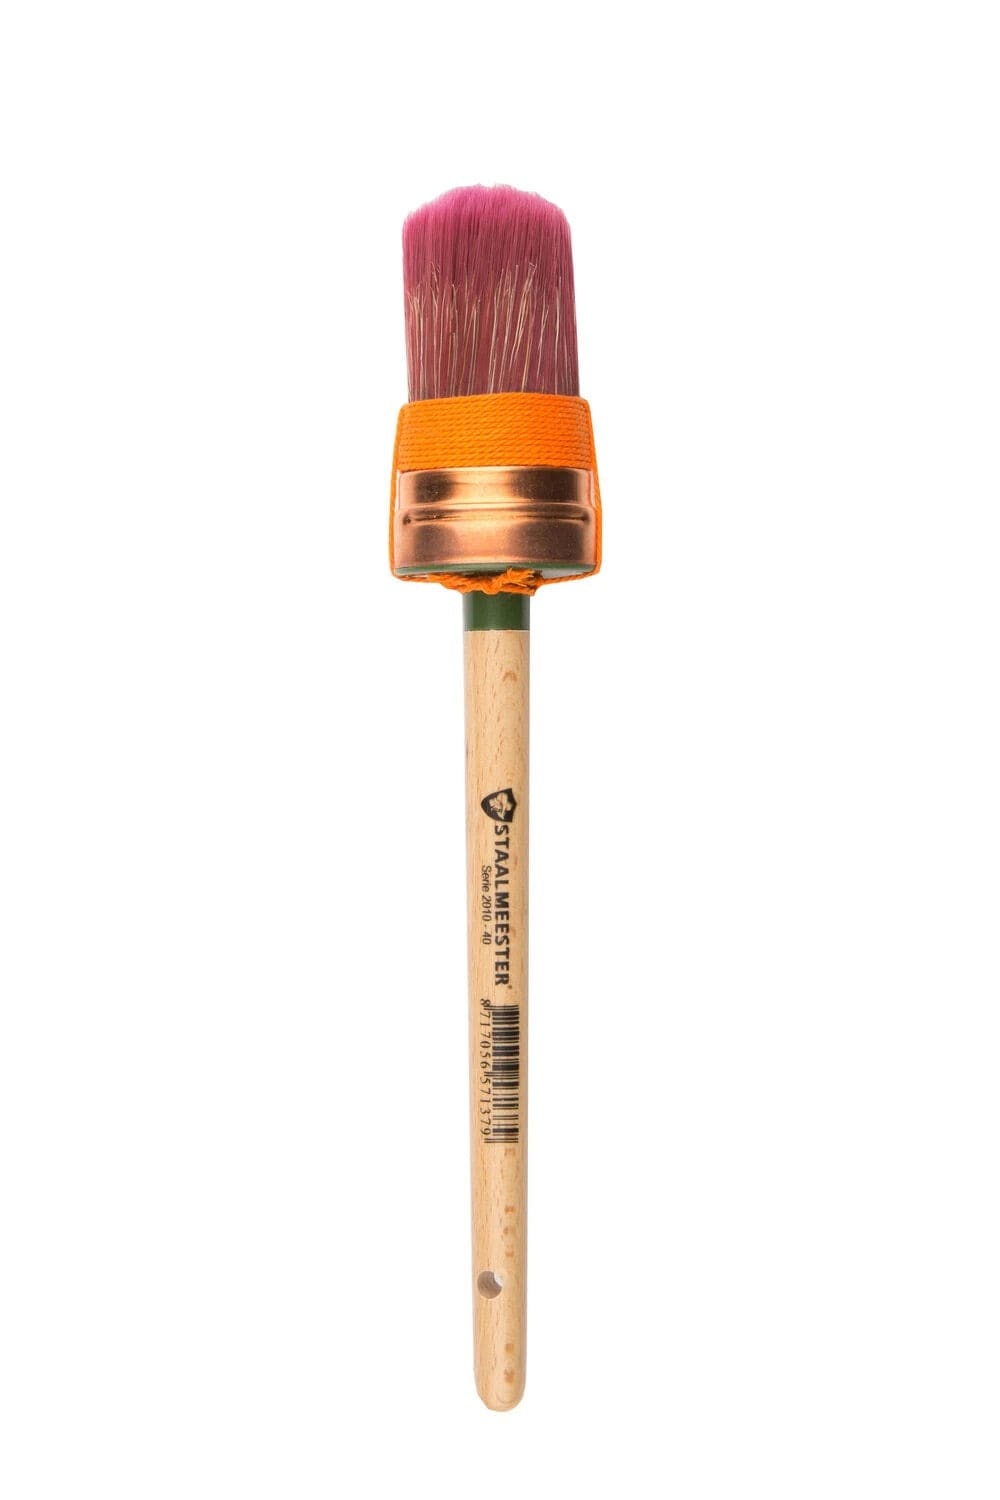 Fusion Paint Brushes Medium #40 Staalmeester Original Series Oval Brush 2010 - 2 sizes